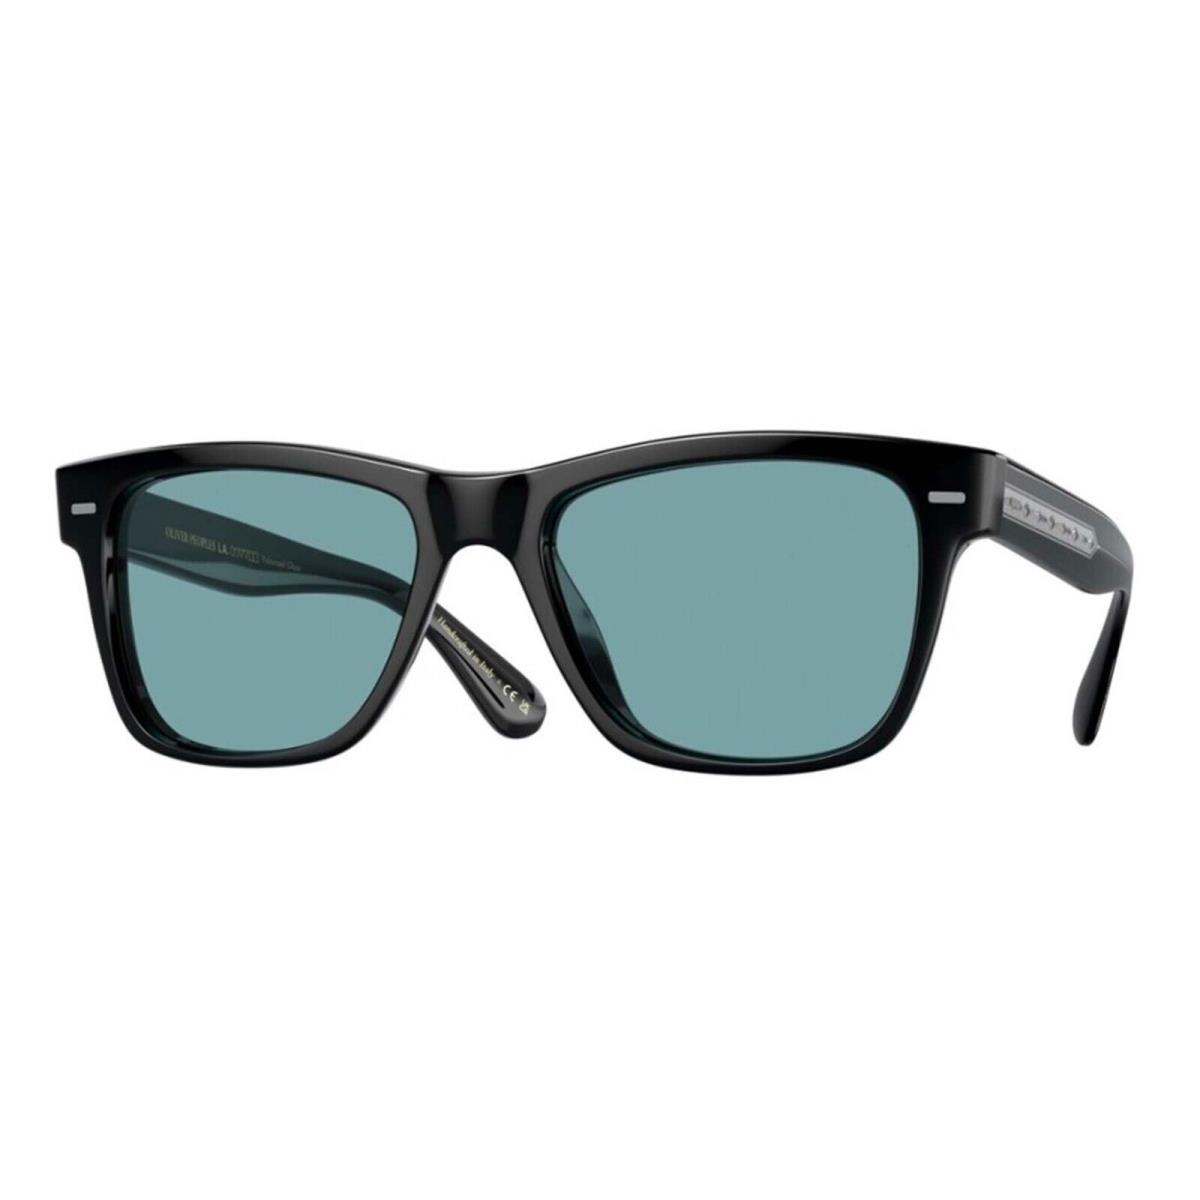 Oliver Peoples Oliver Sun OV 5393SU Black/turquoise Polar 1005/P1 Sunglasses - Frame: Black, Lens: Turquoise Polarized